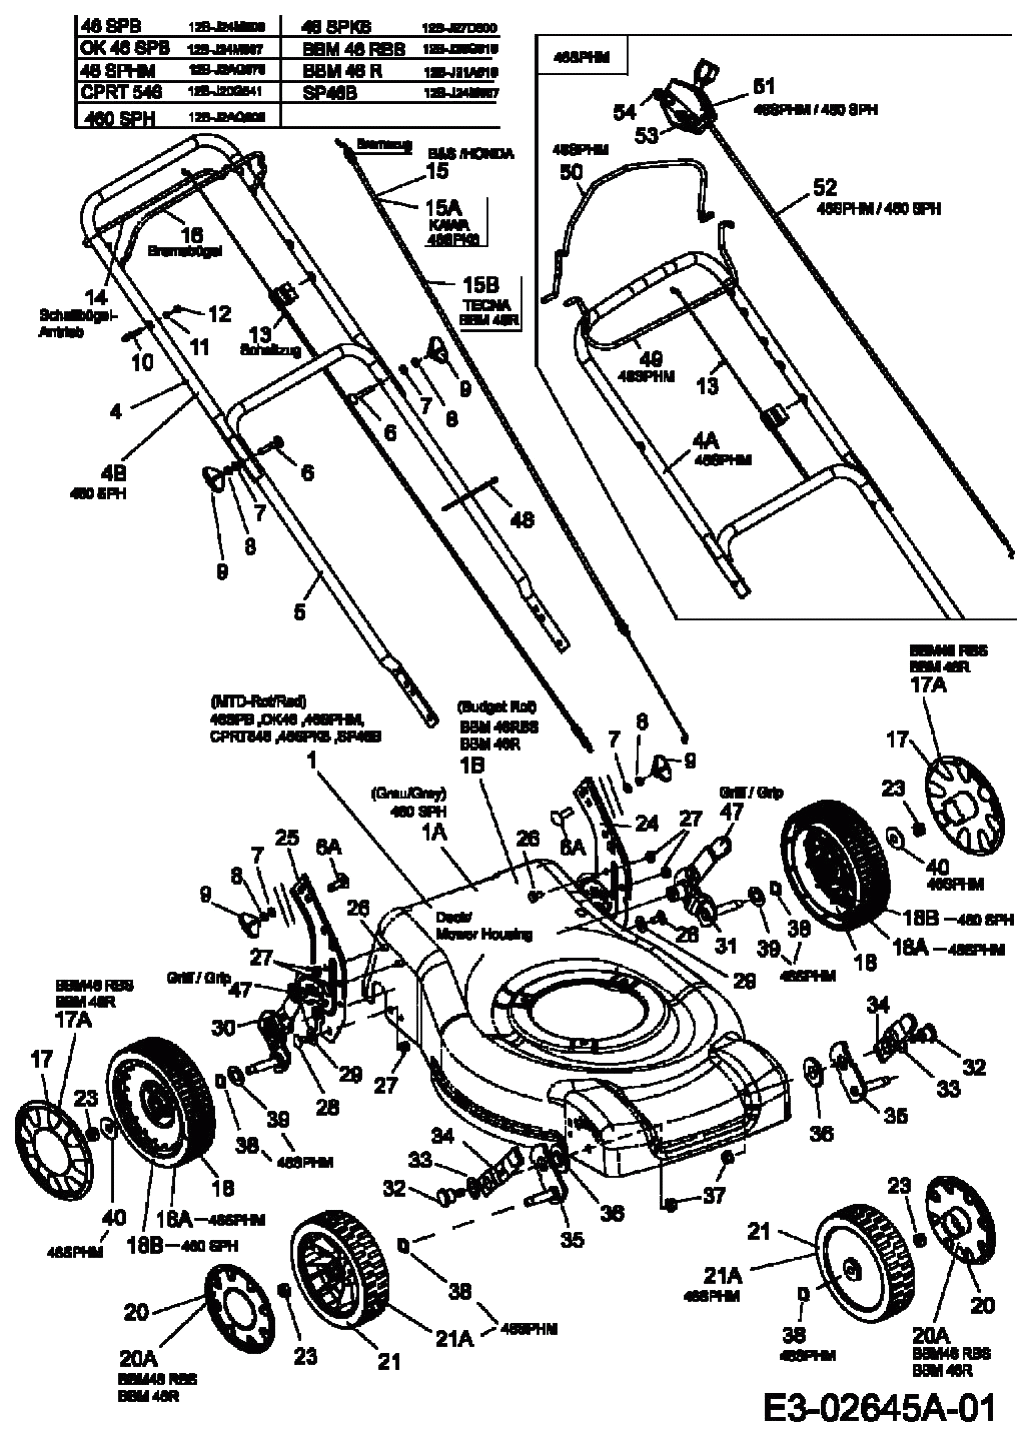 MTD Артикул 12B-J27D600 (год выпуска 2006). Ручка, колеса, регулятор высоты реза